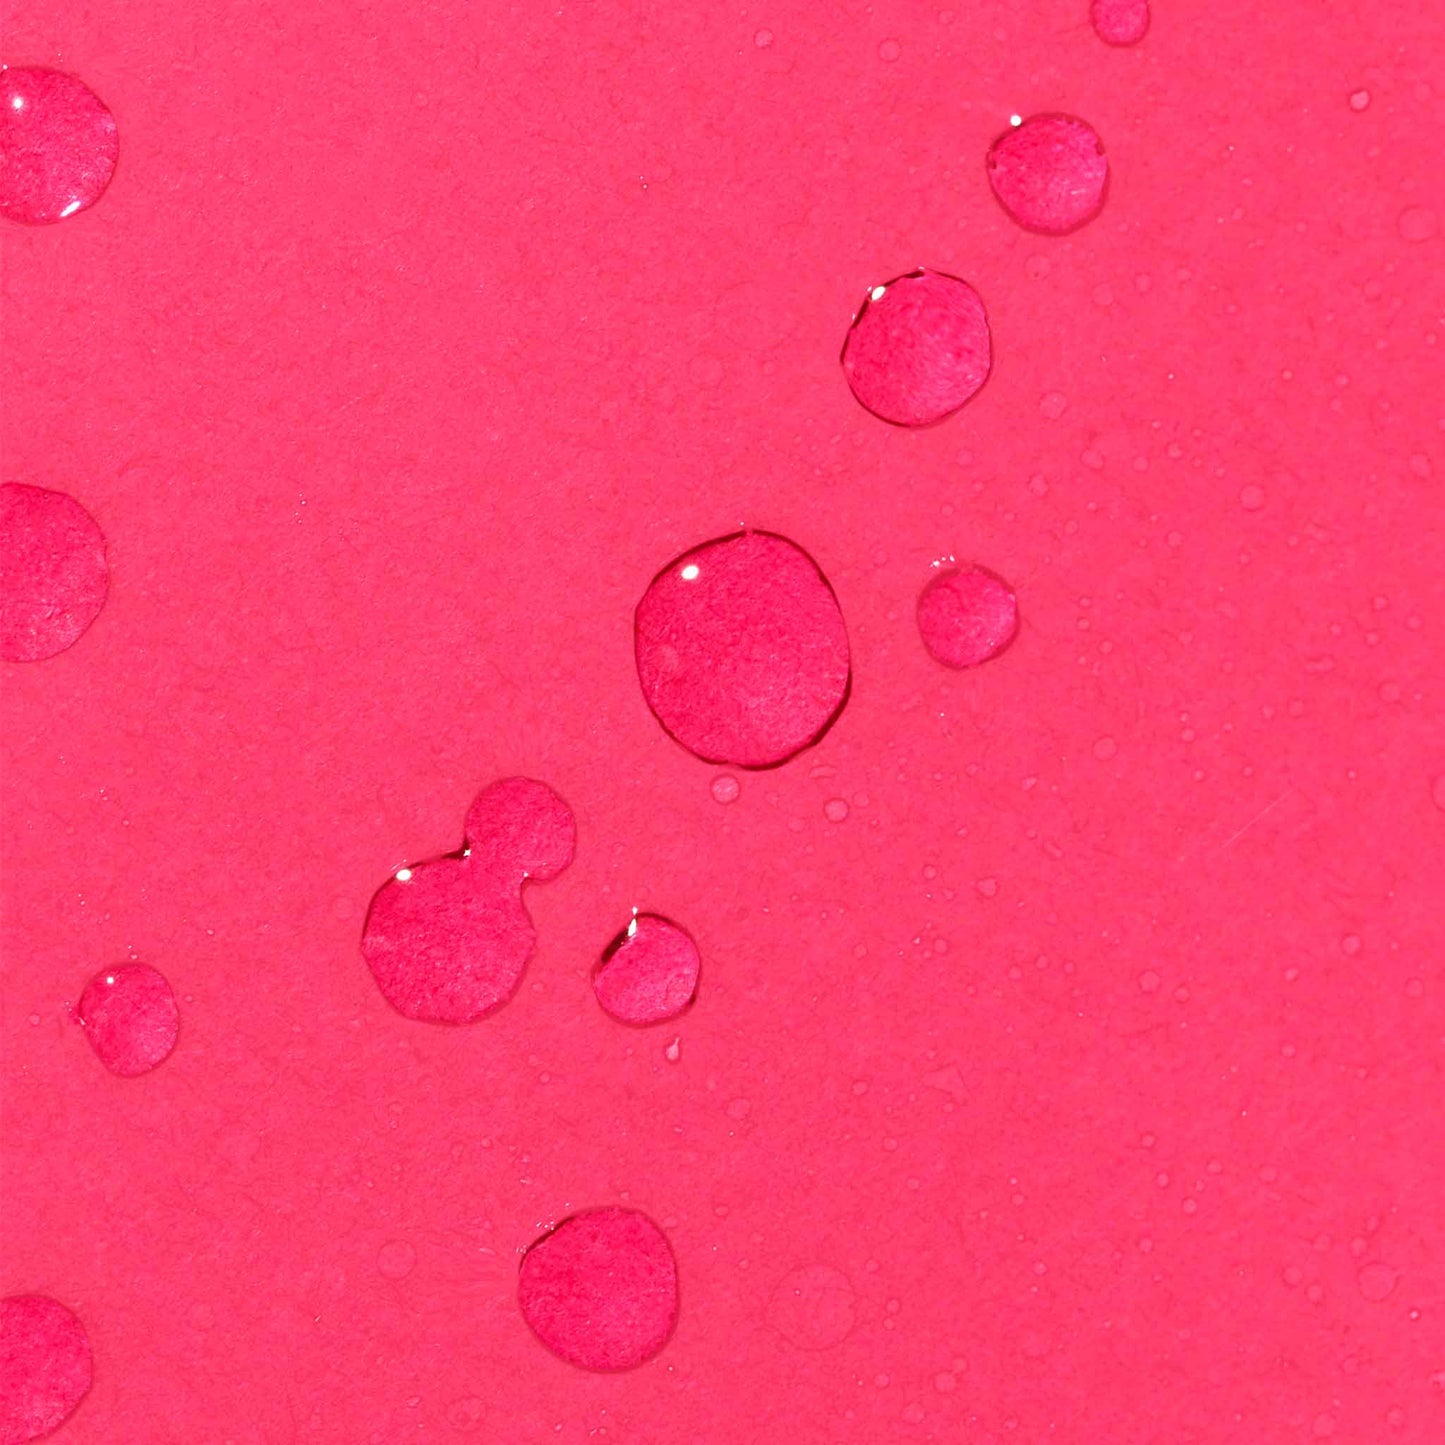 Droplets of Clarifying Bacne Spray